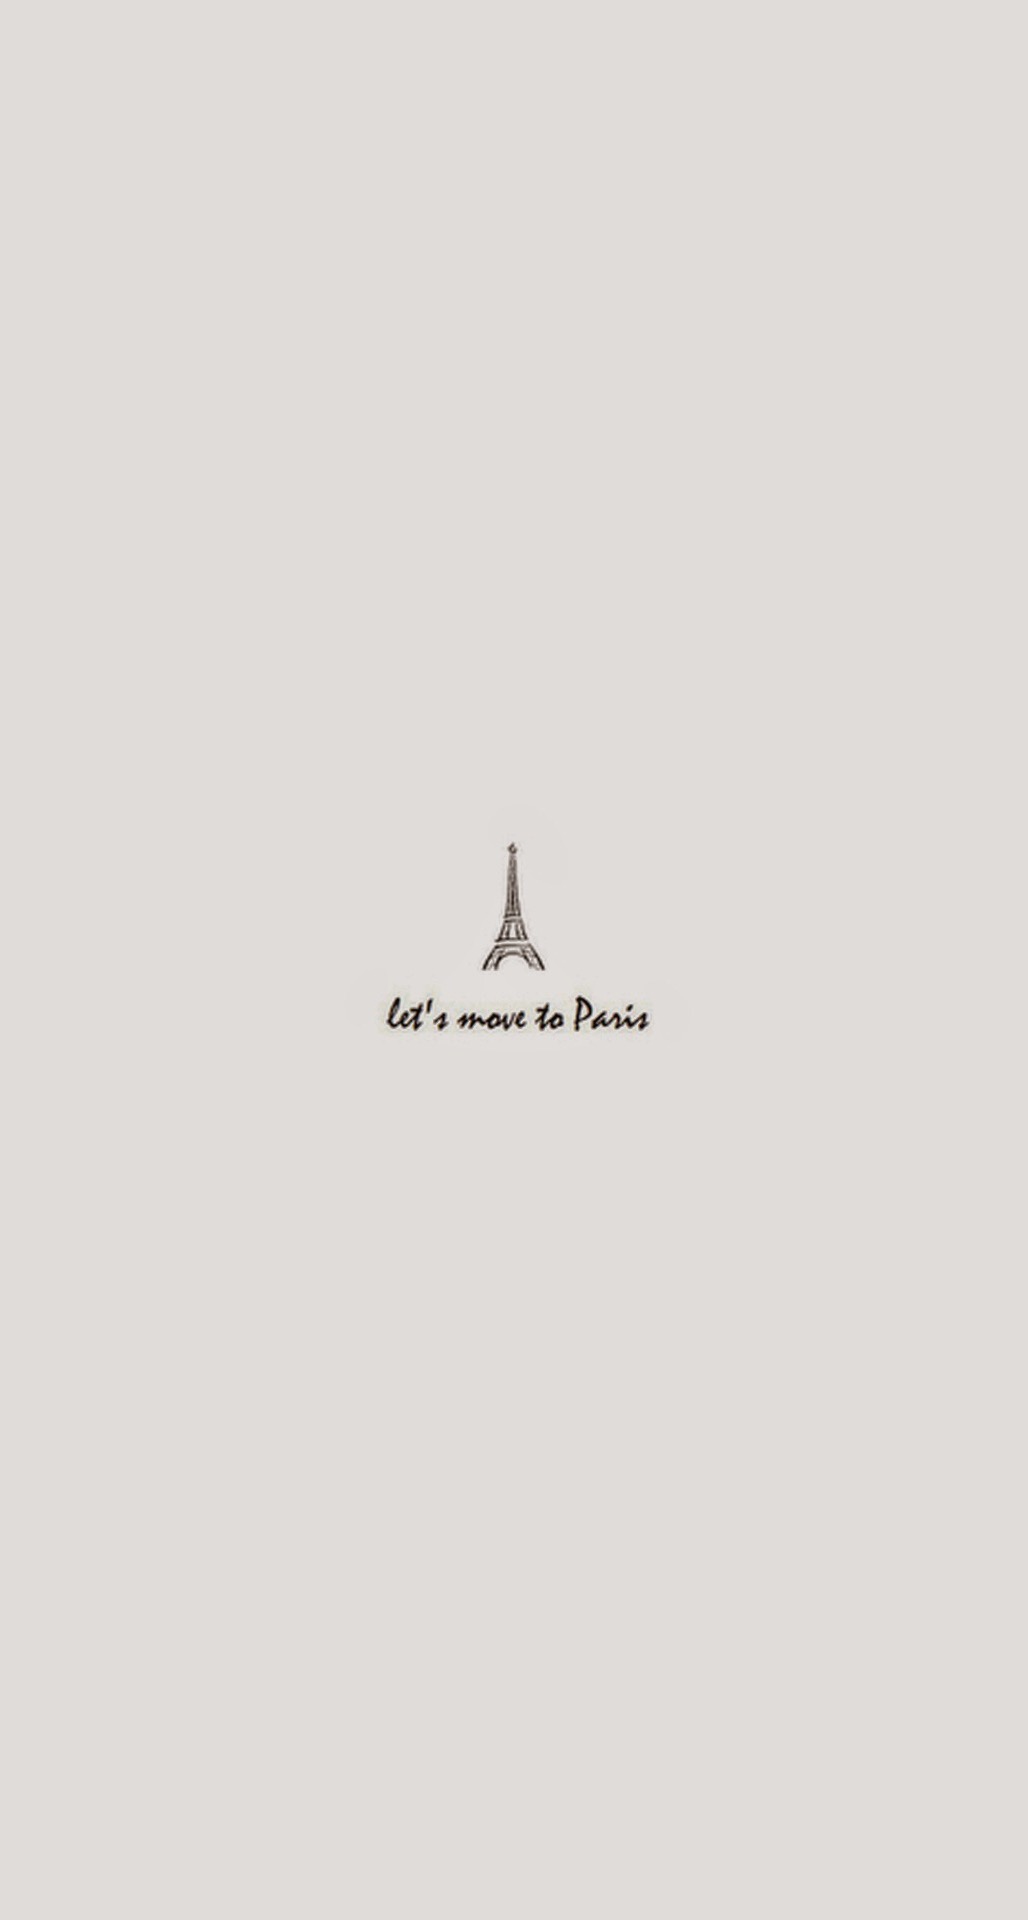 Move To Paris Minimal iPhone 6 Plus HD Wallpaper